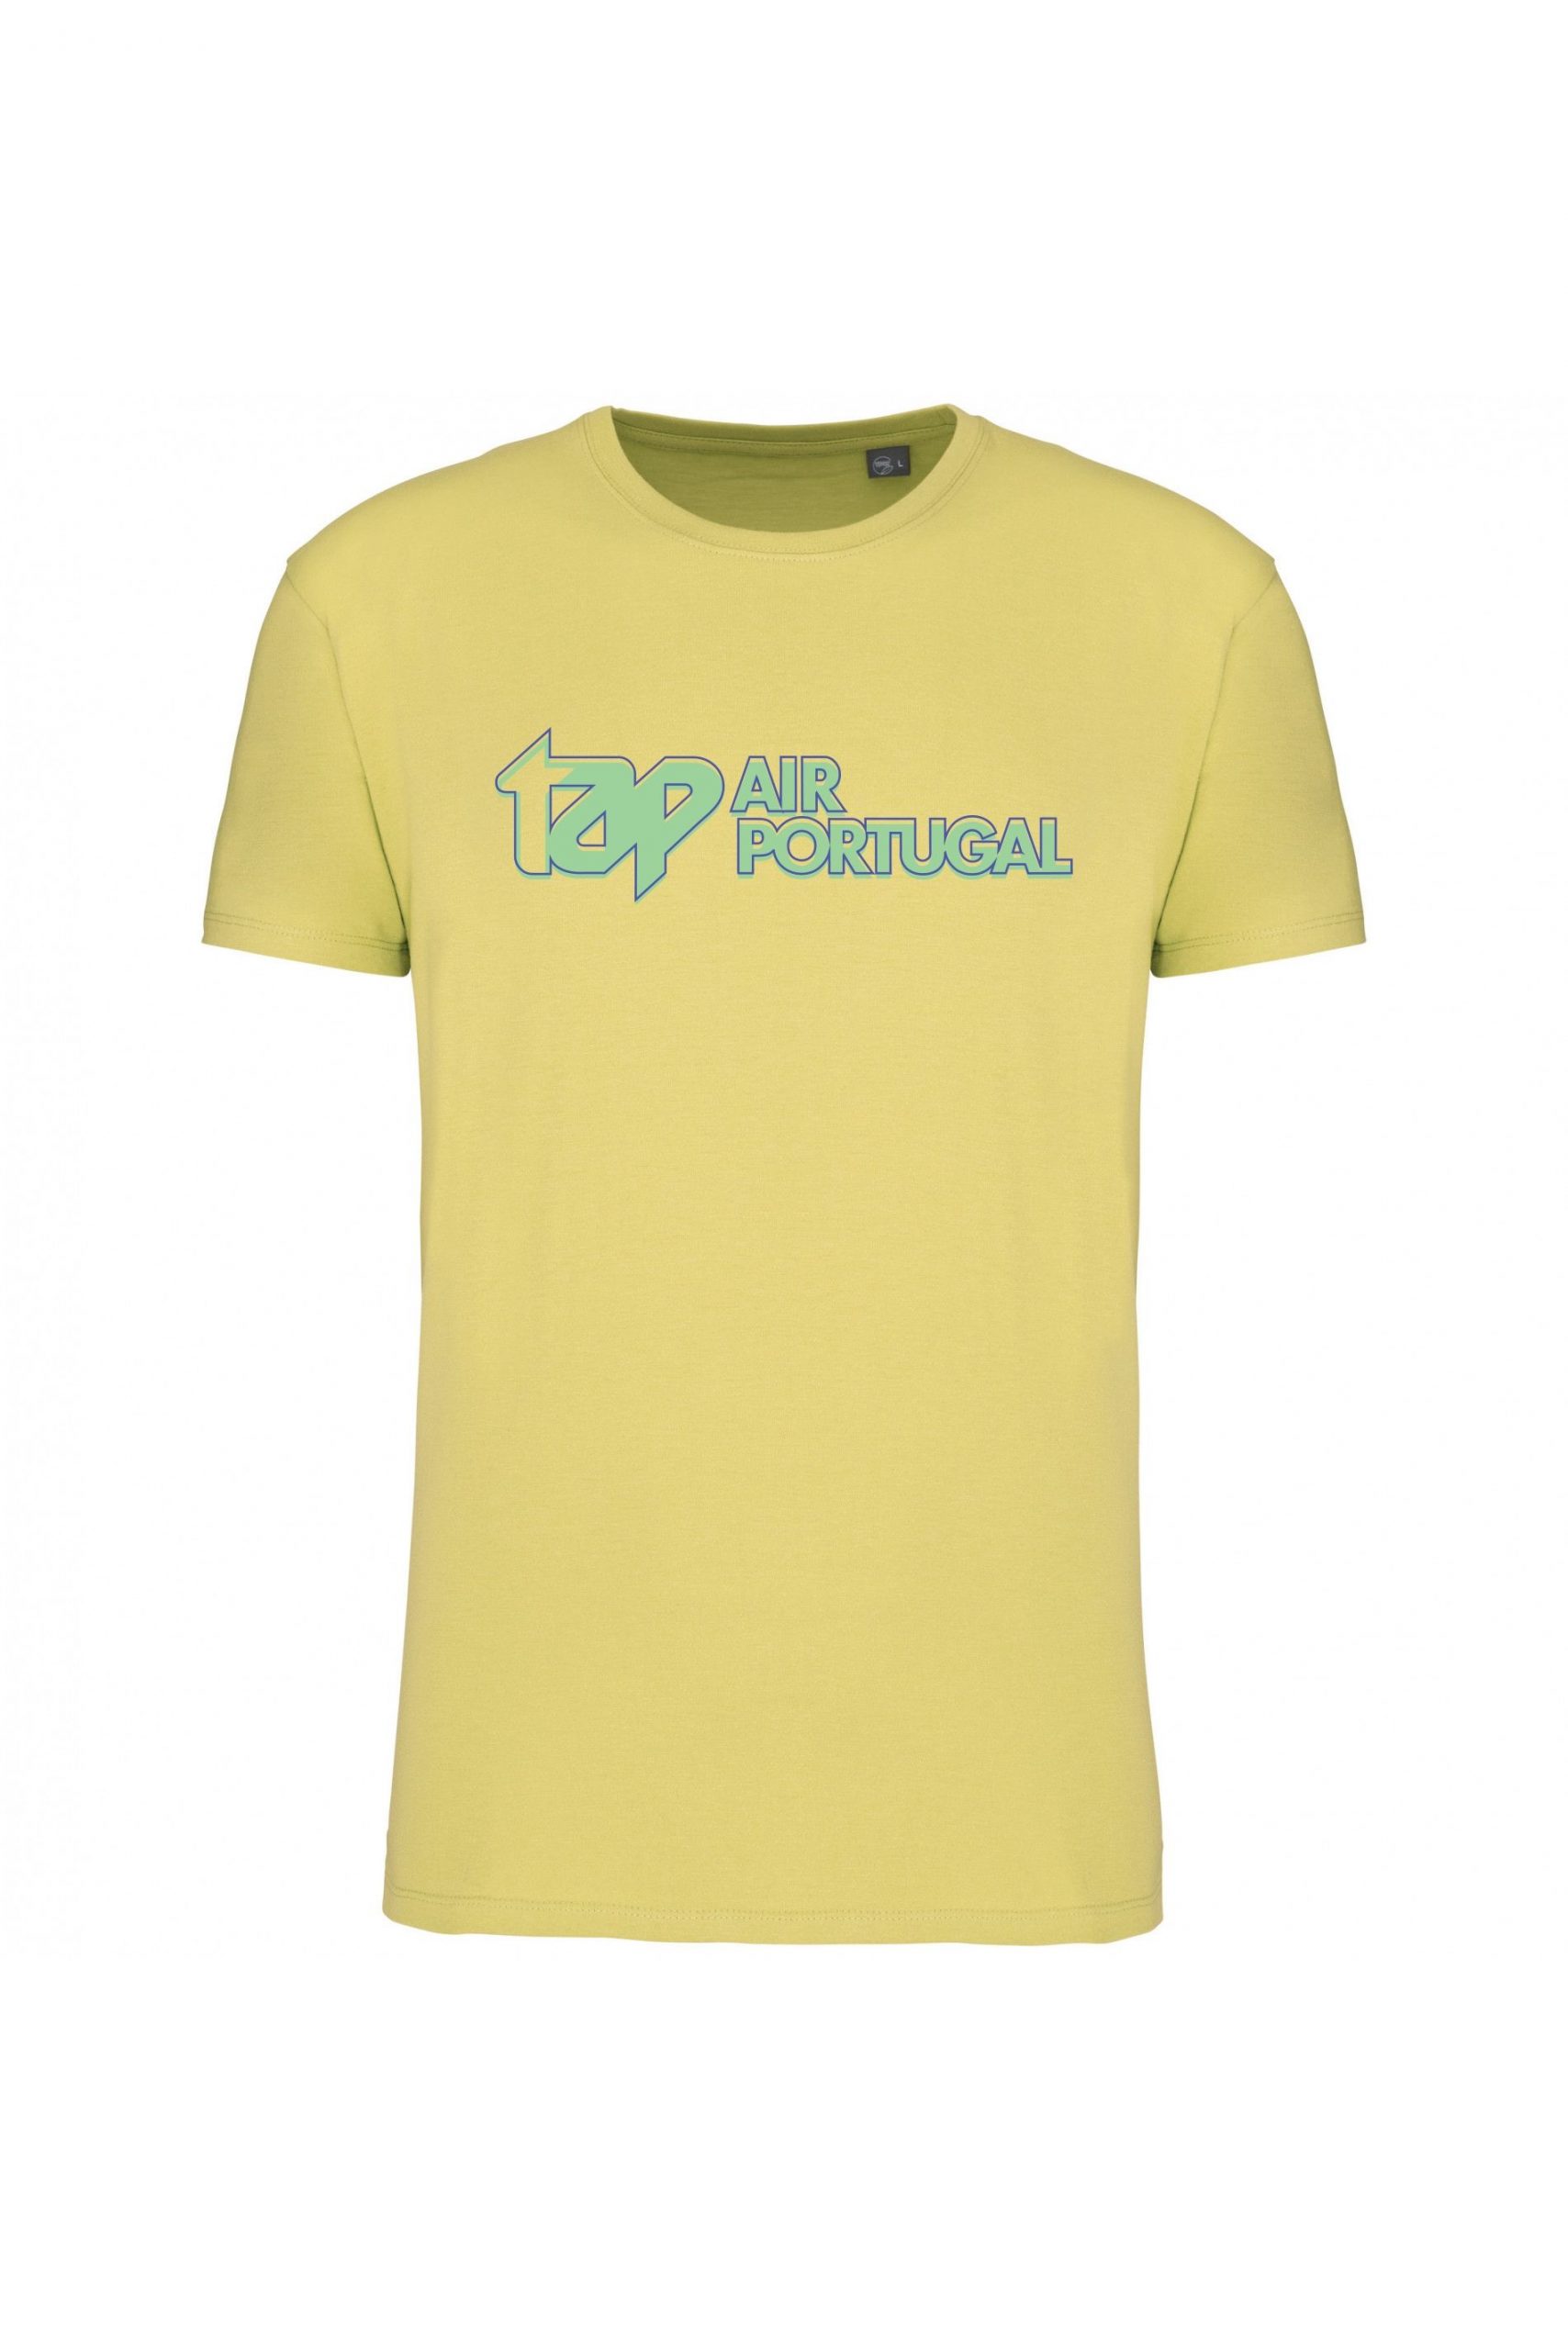 t-shirt-tap-anos-80-amarela-1702307250-scaled